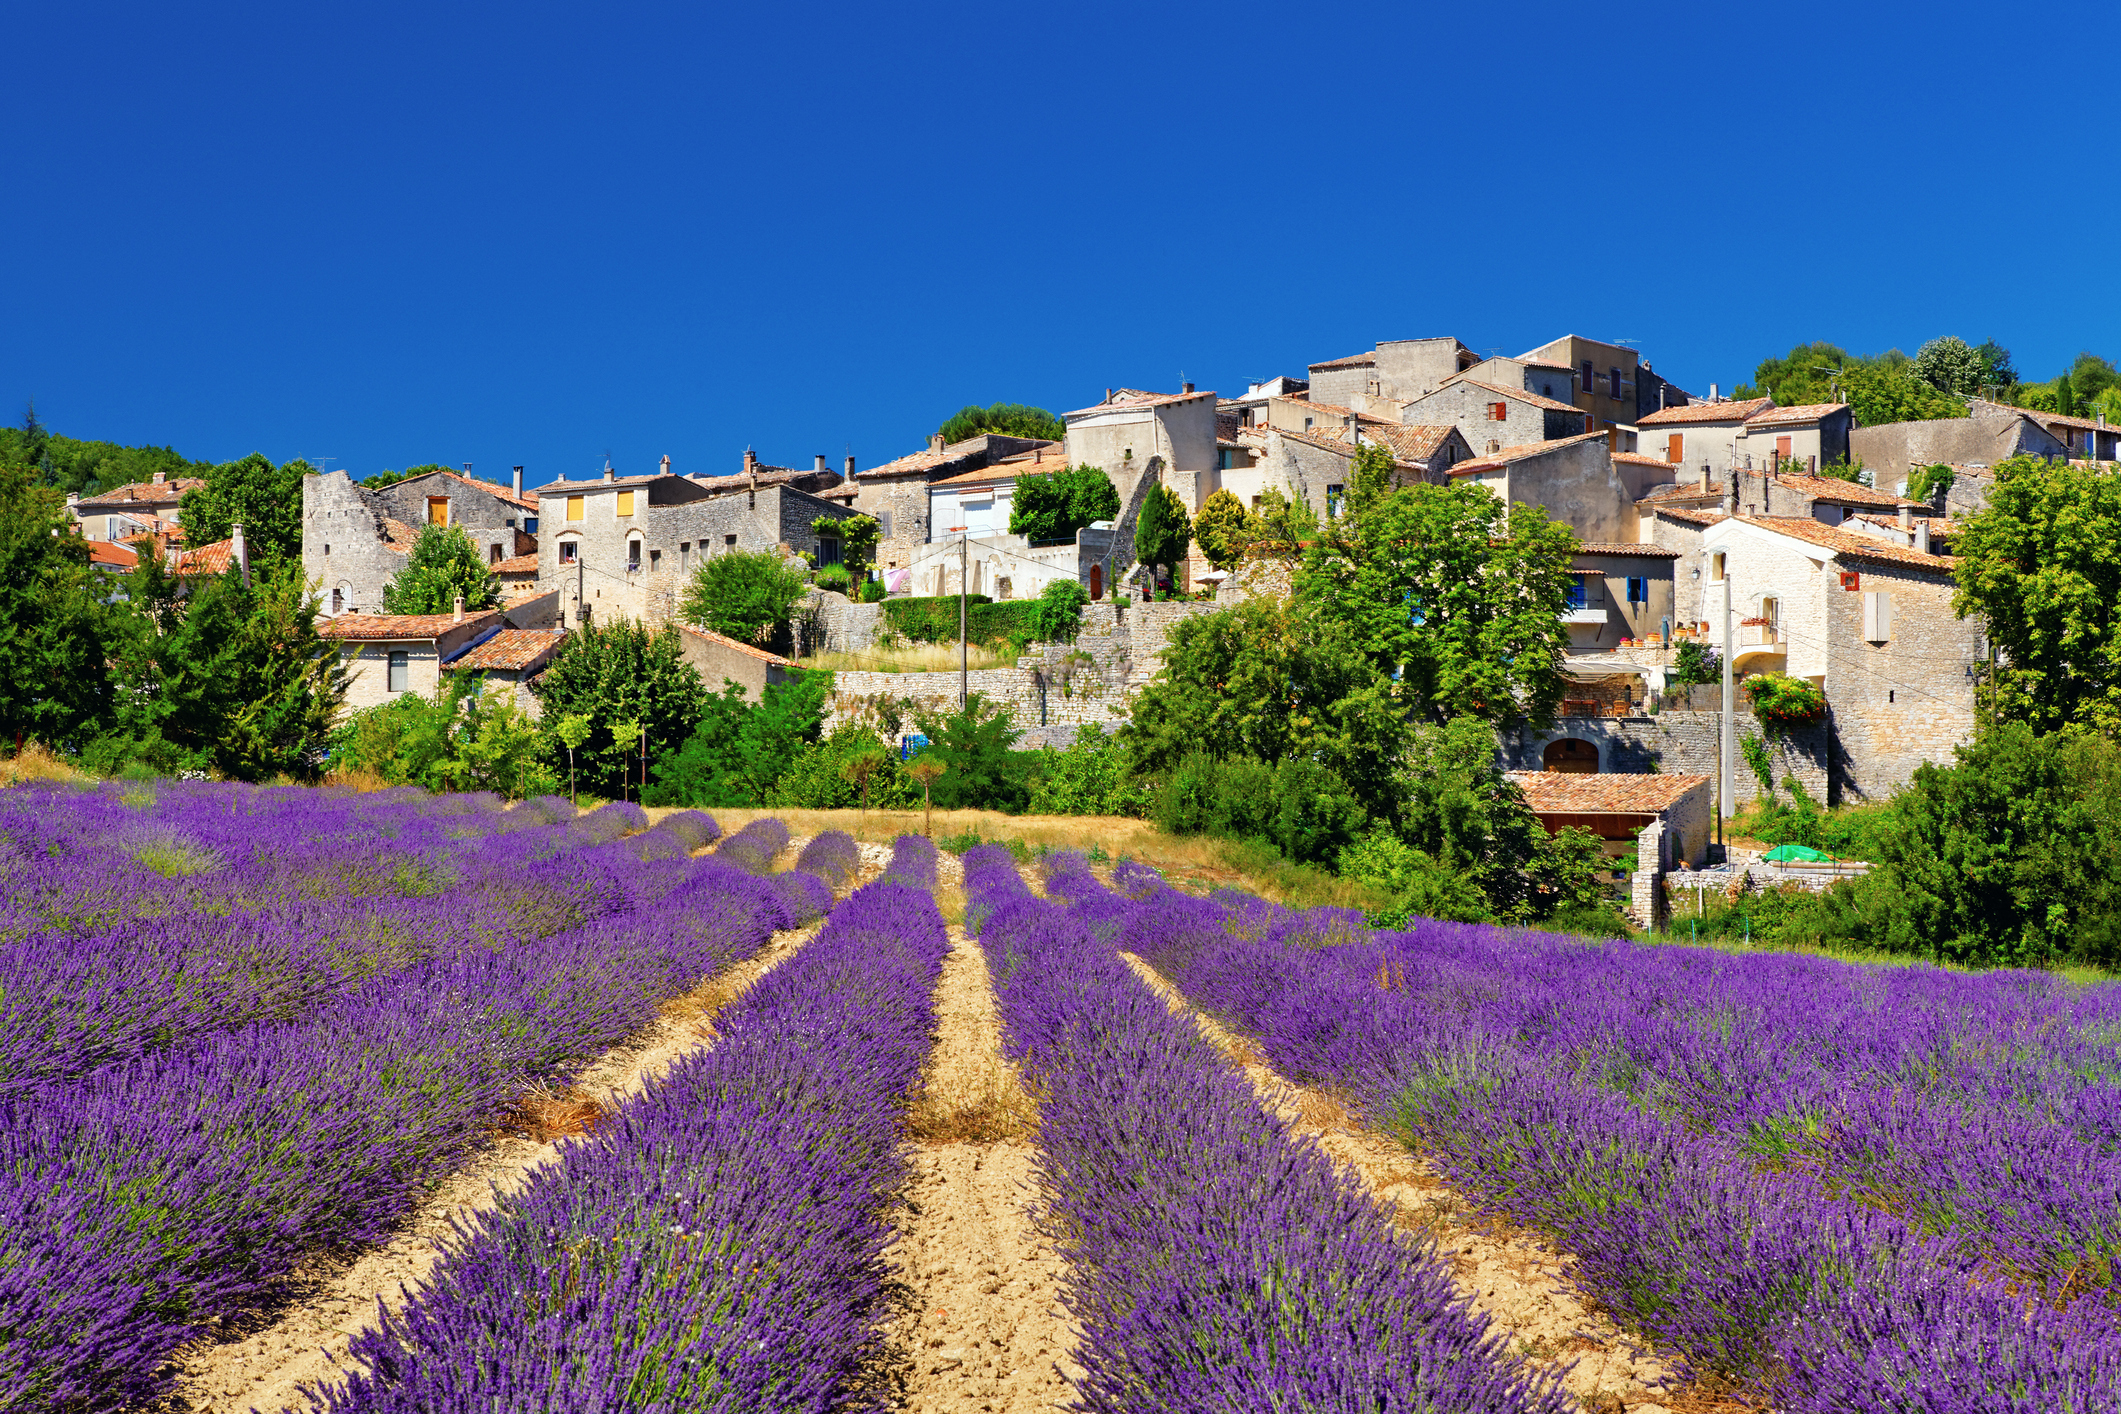 France, Aquitaine Region – Prospective study of Tourism